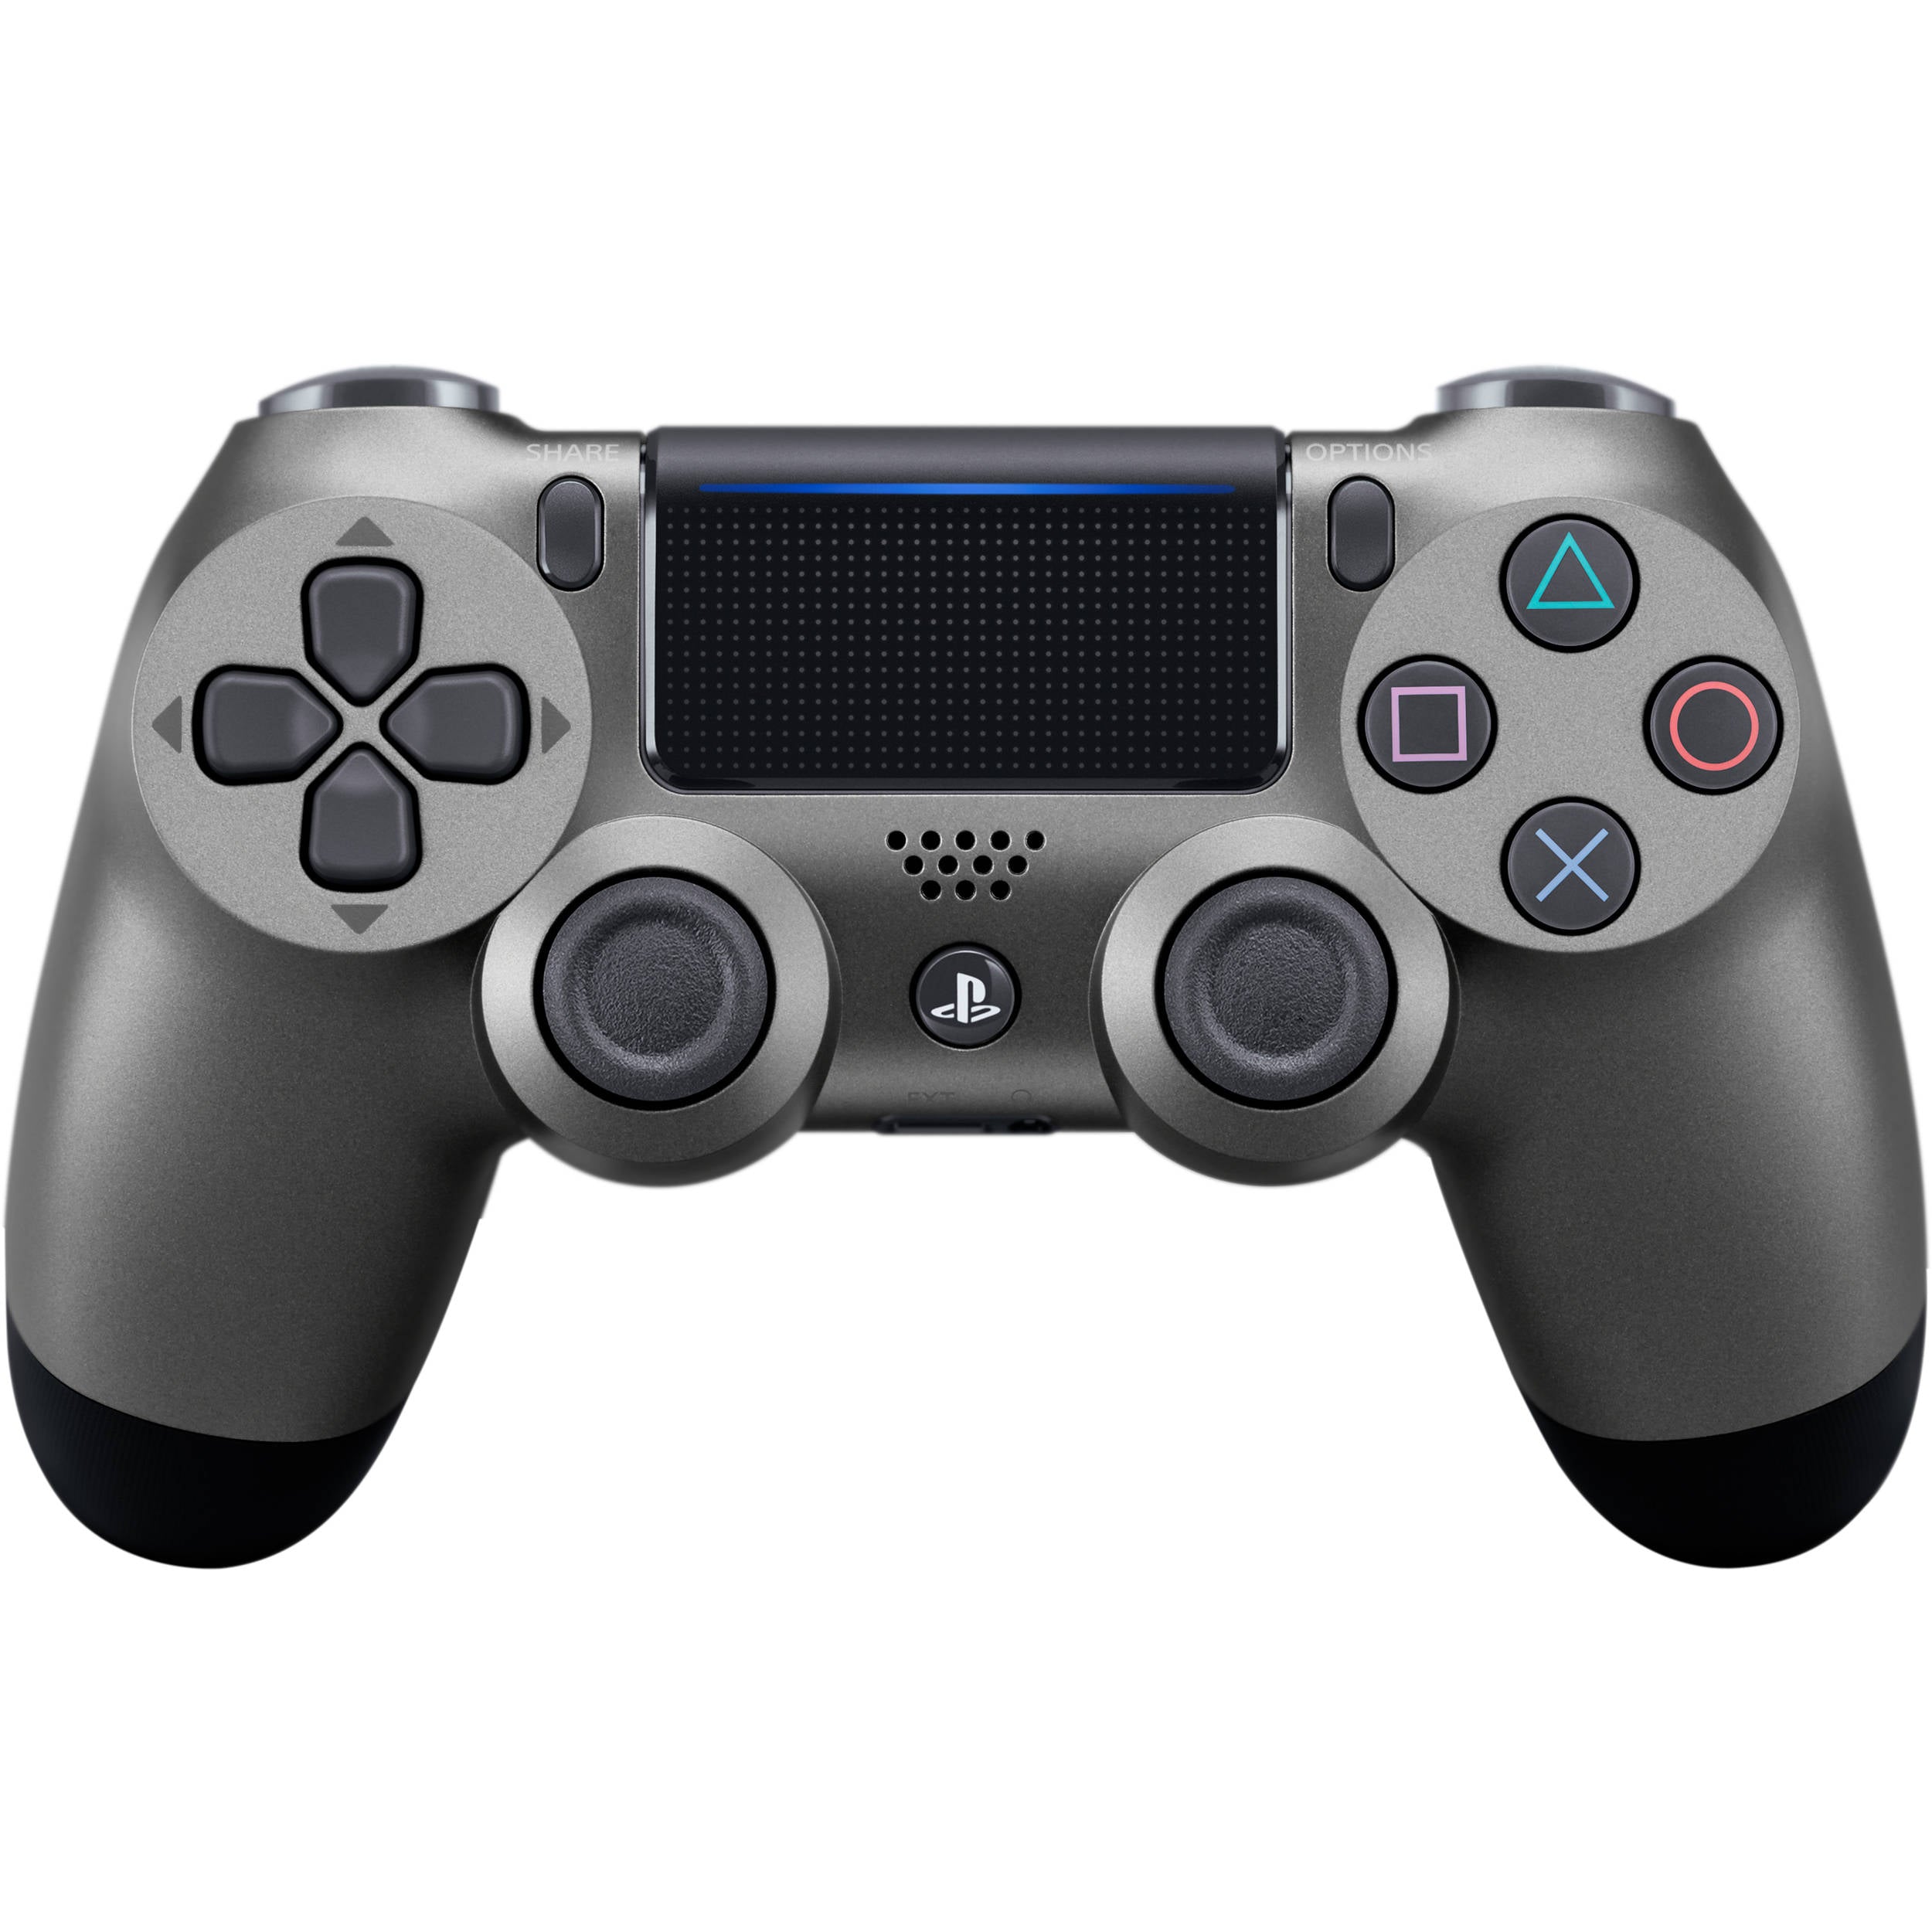 Sony PlayStation 4 DualShock 4 Wireless Controller - Steel Black - New Version freeshipping - Pro-Distributing